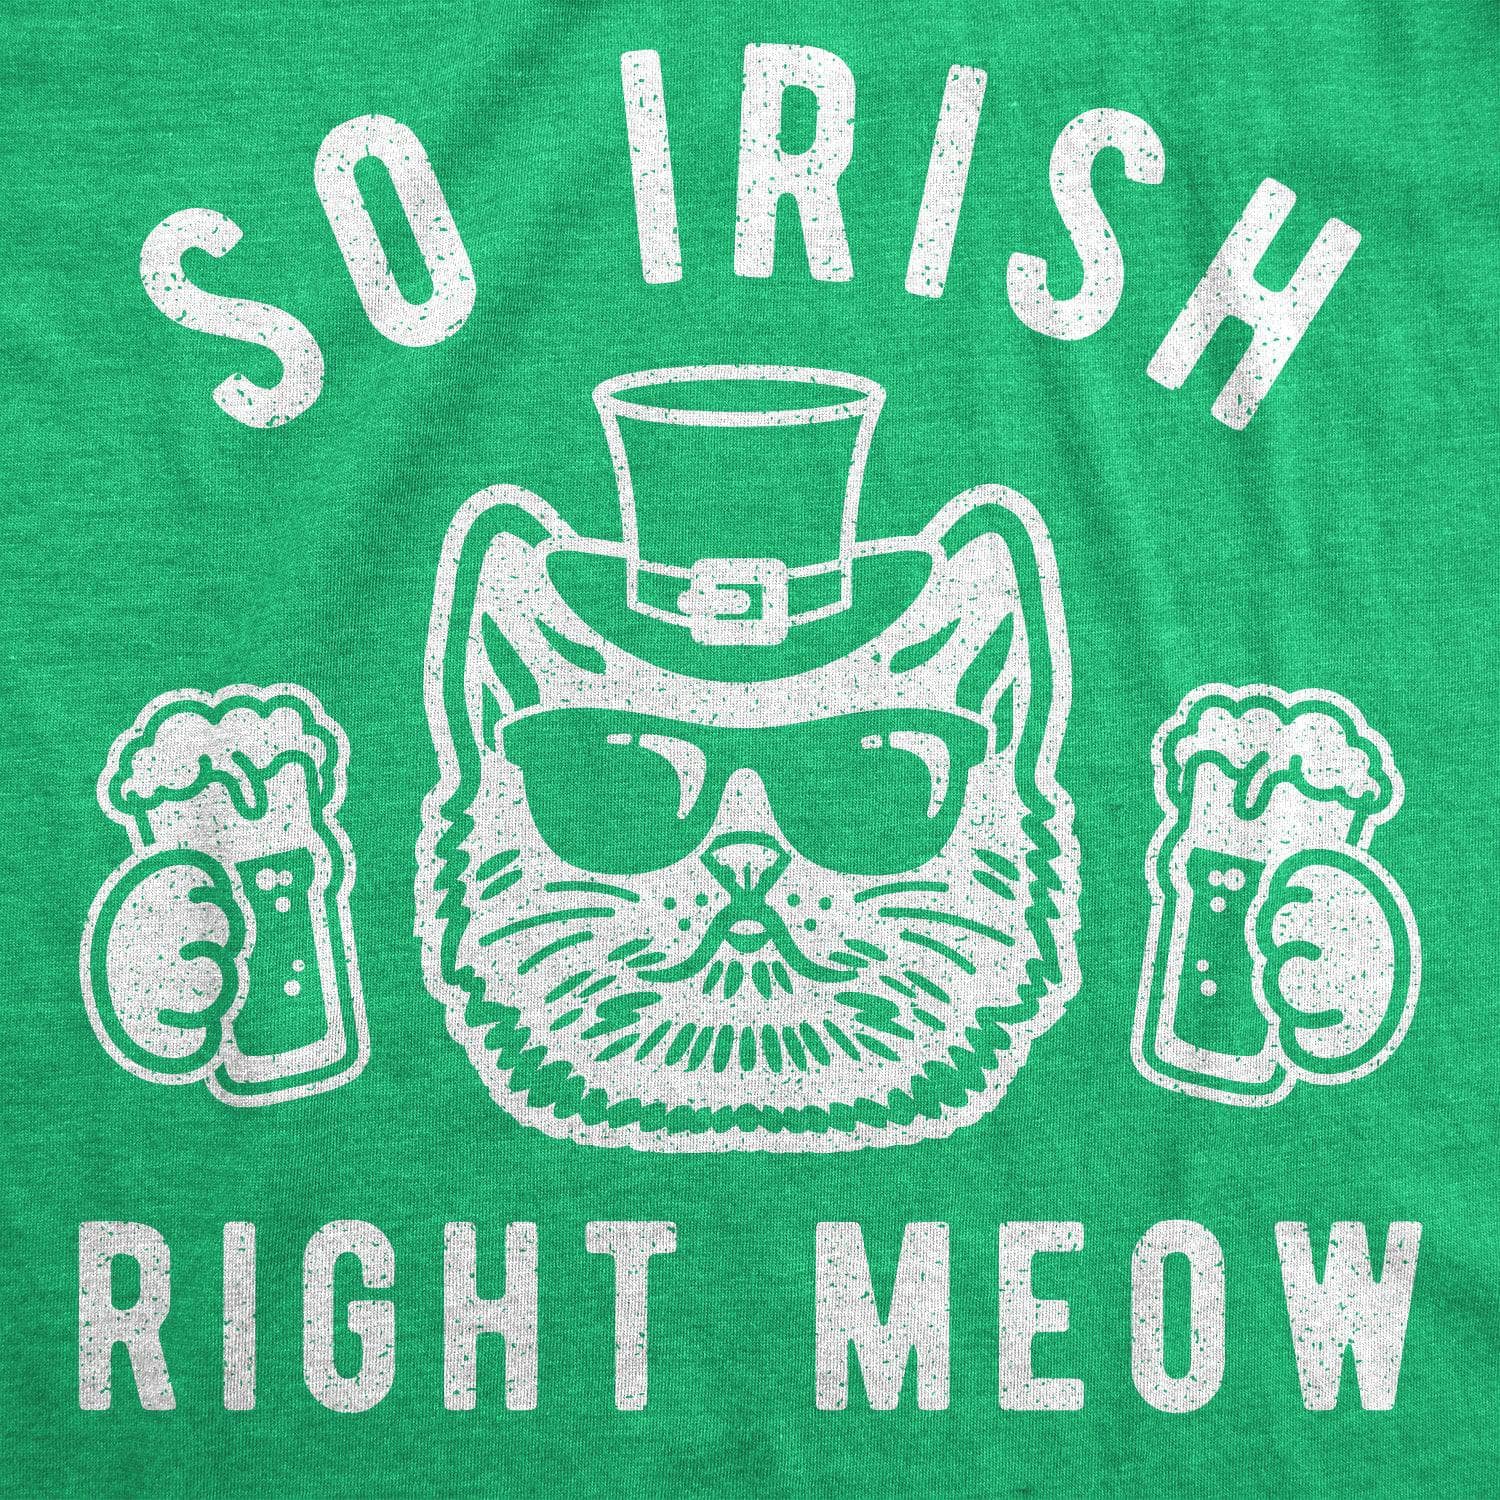 So Irish Right Meow Women's Tshirt  -  Crazy Dog T-Shirts